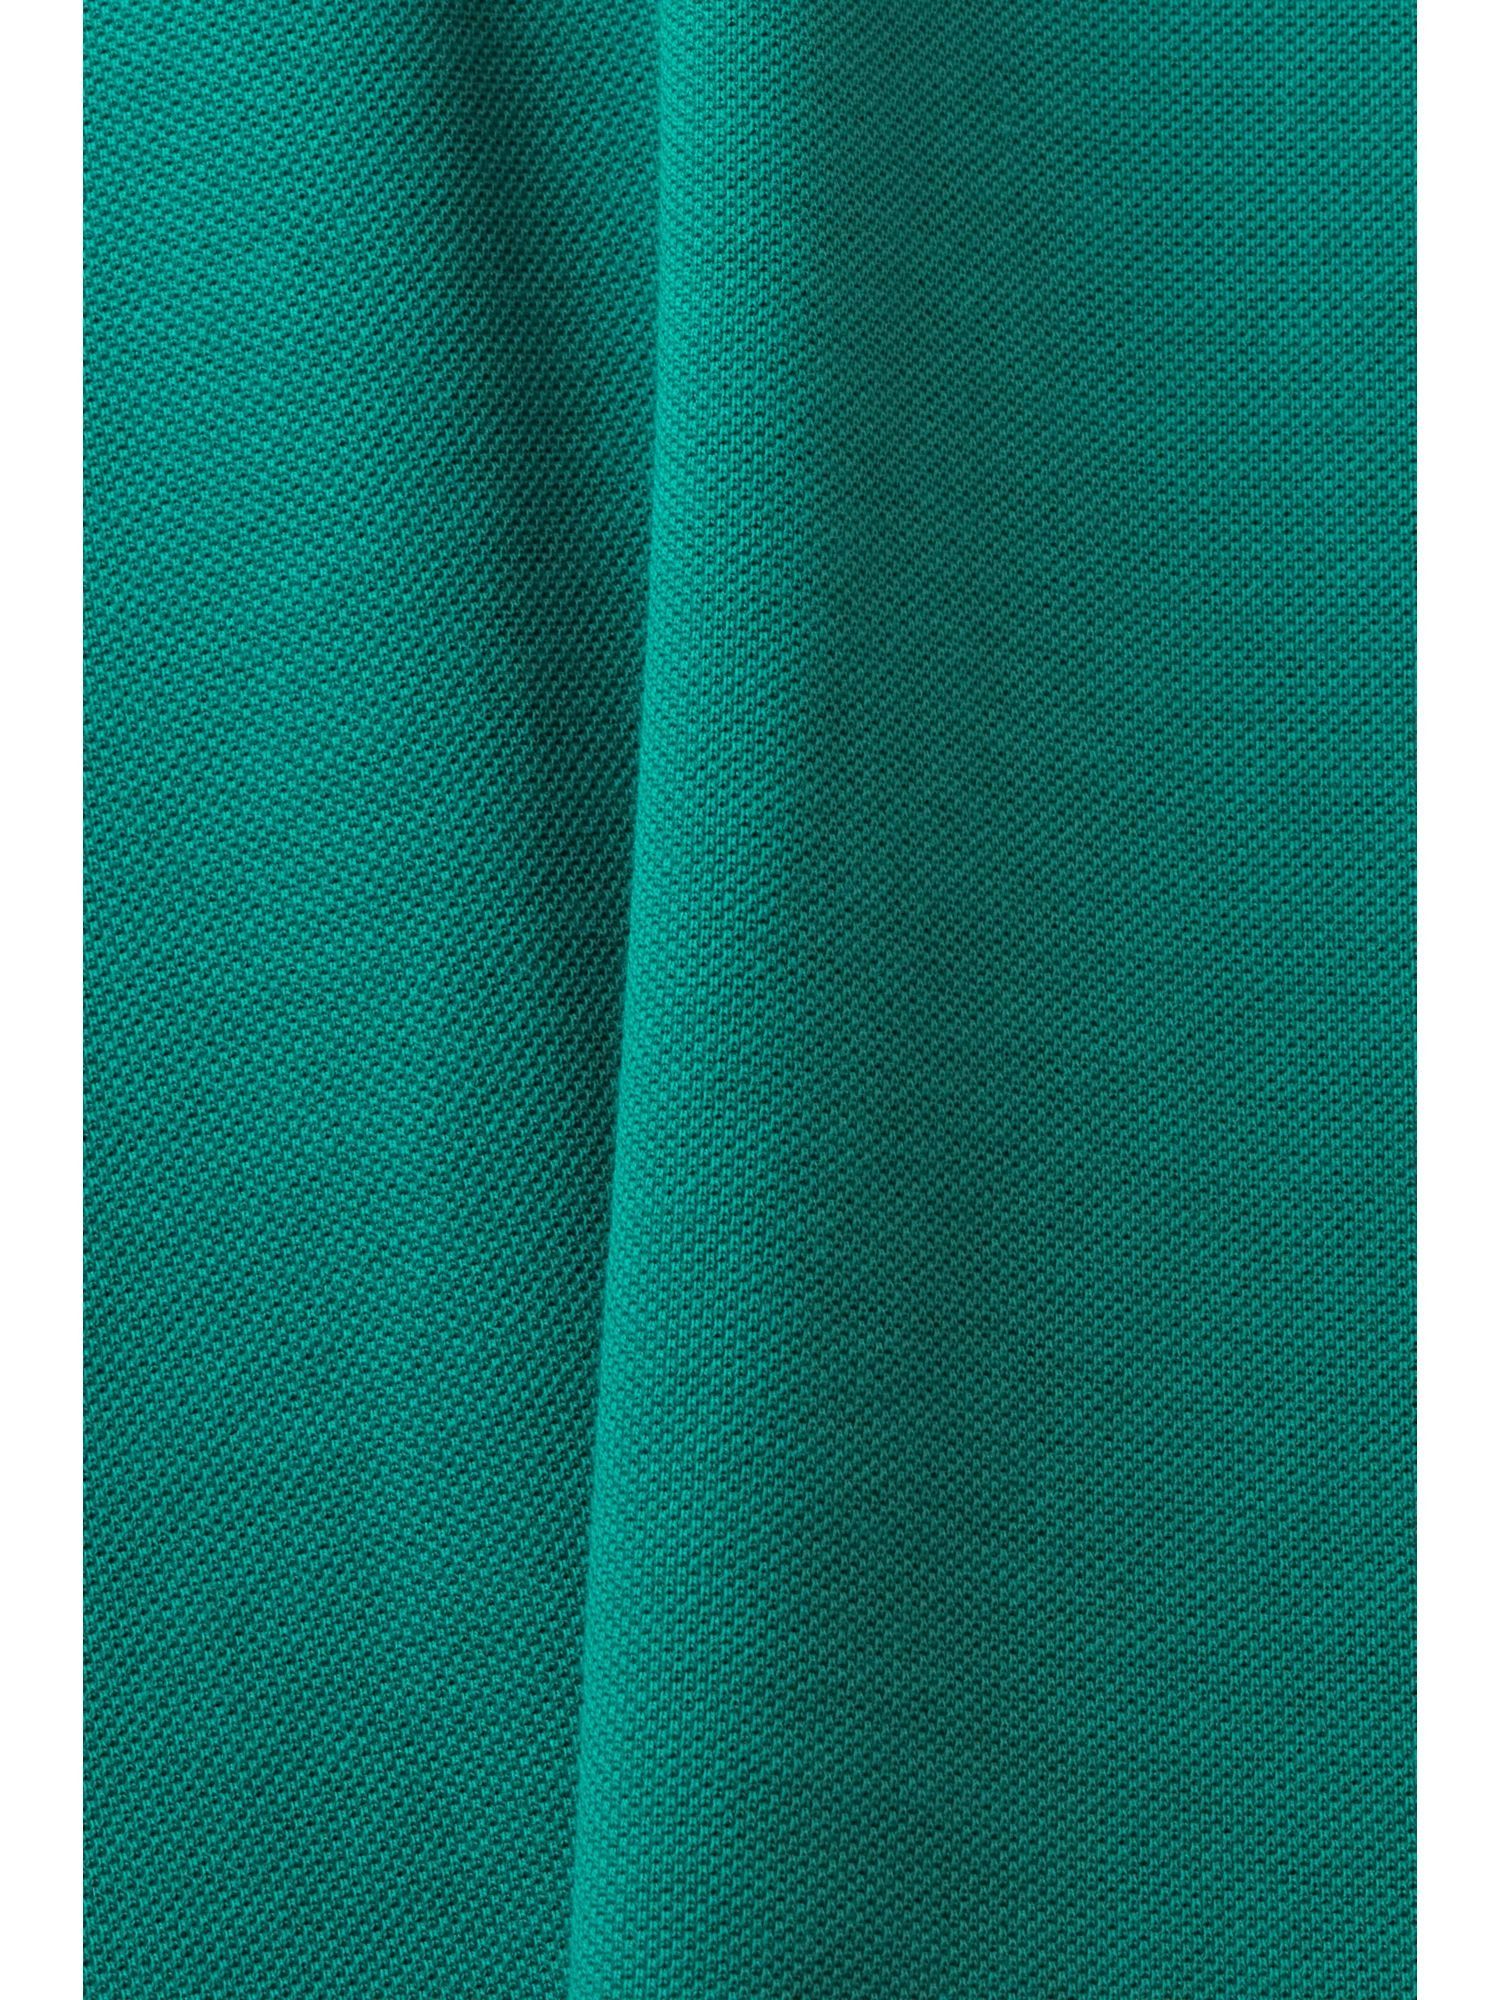 GREEN Poloshirt Poloshirt EMERALD Esprit Slim Fit